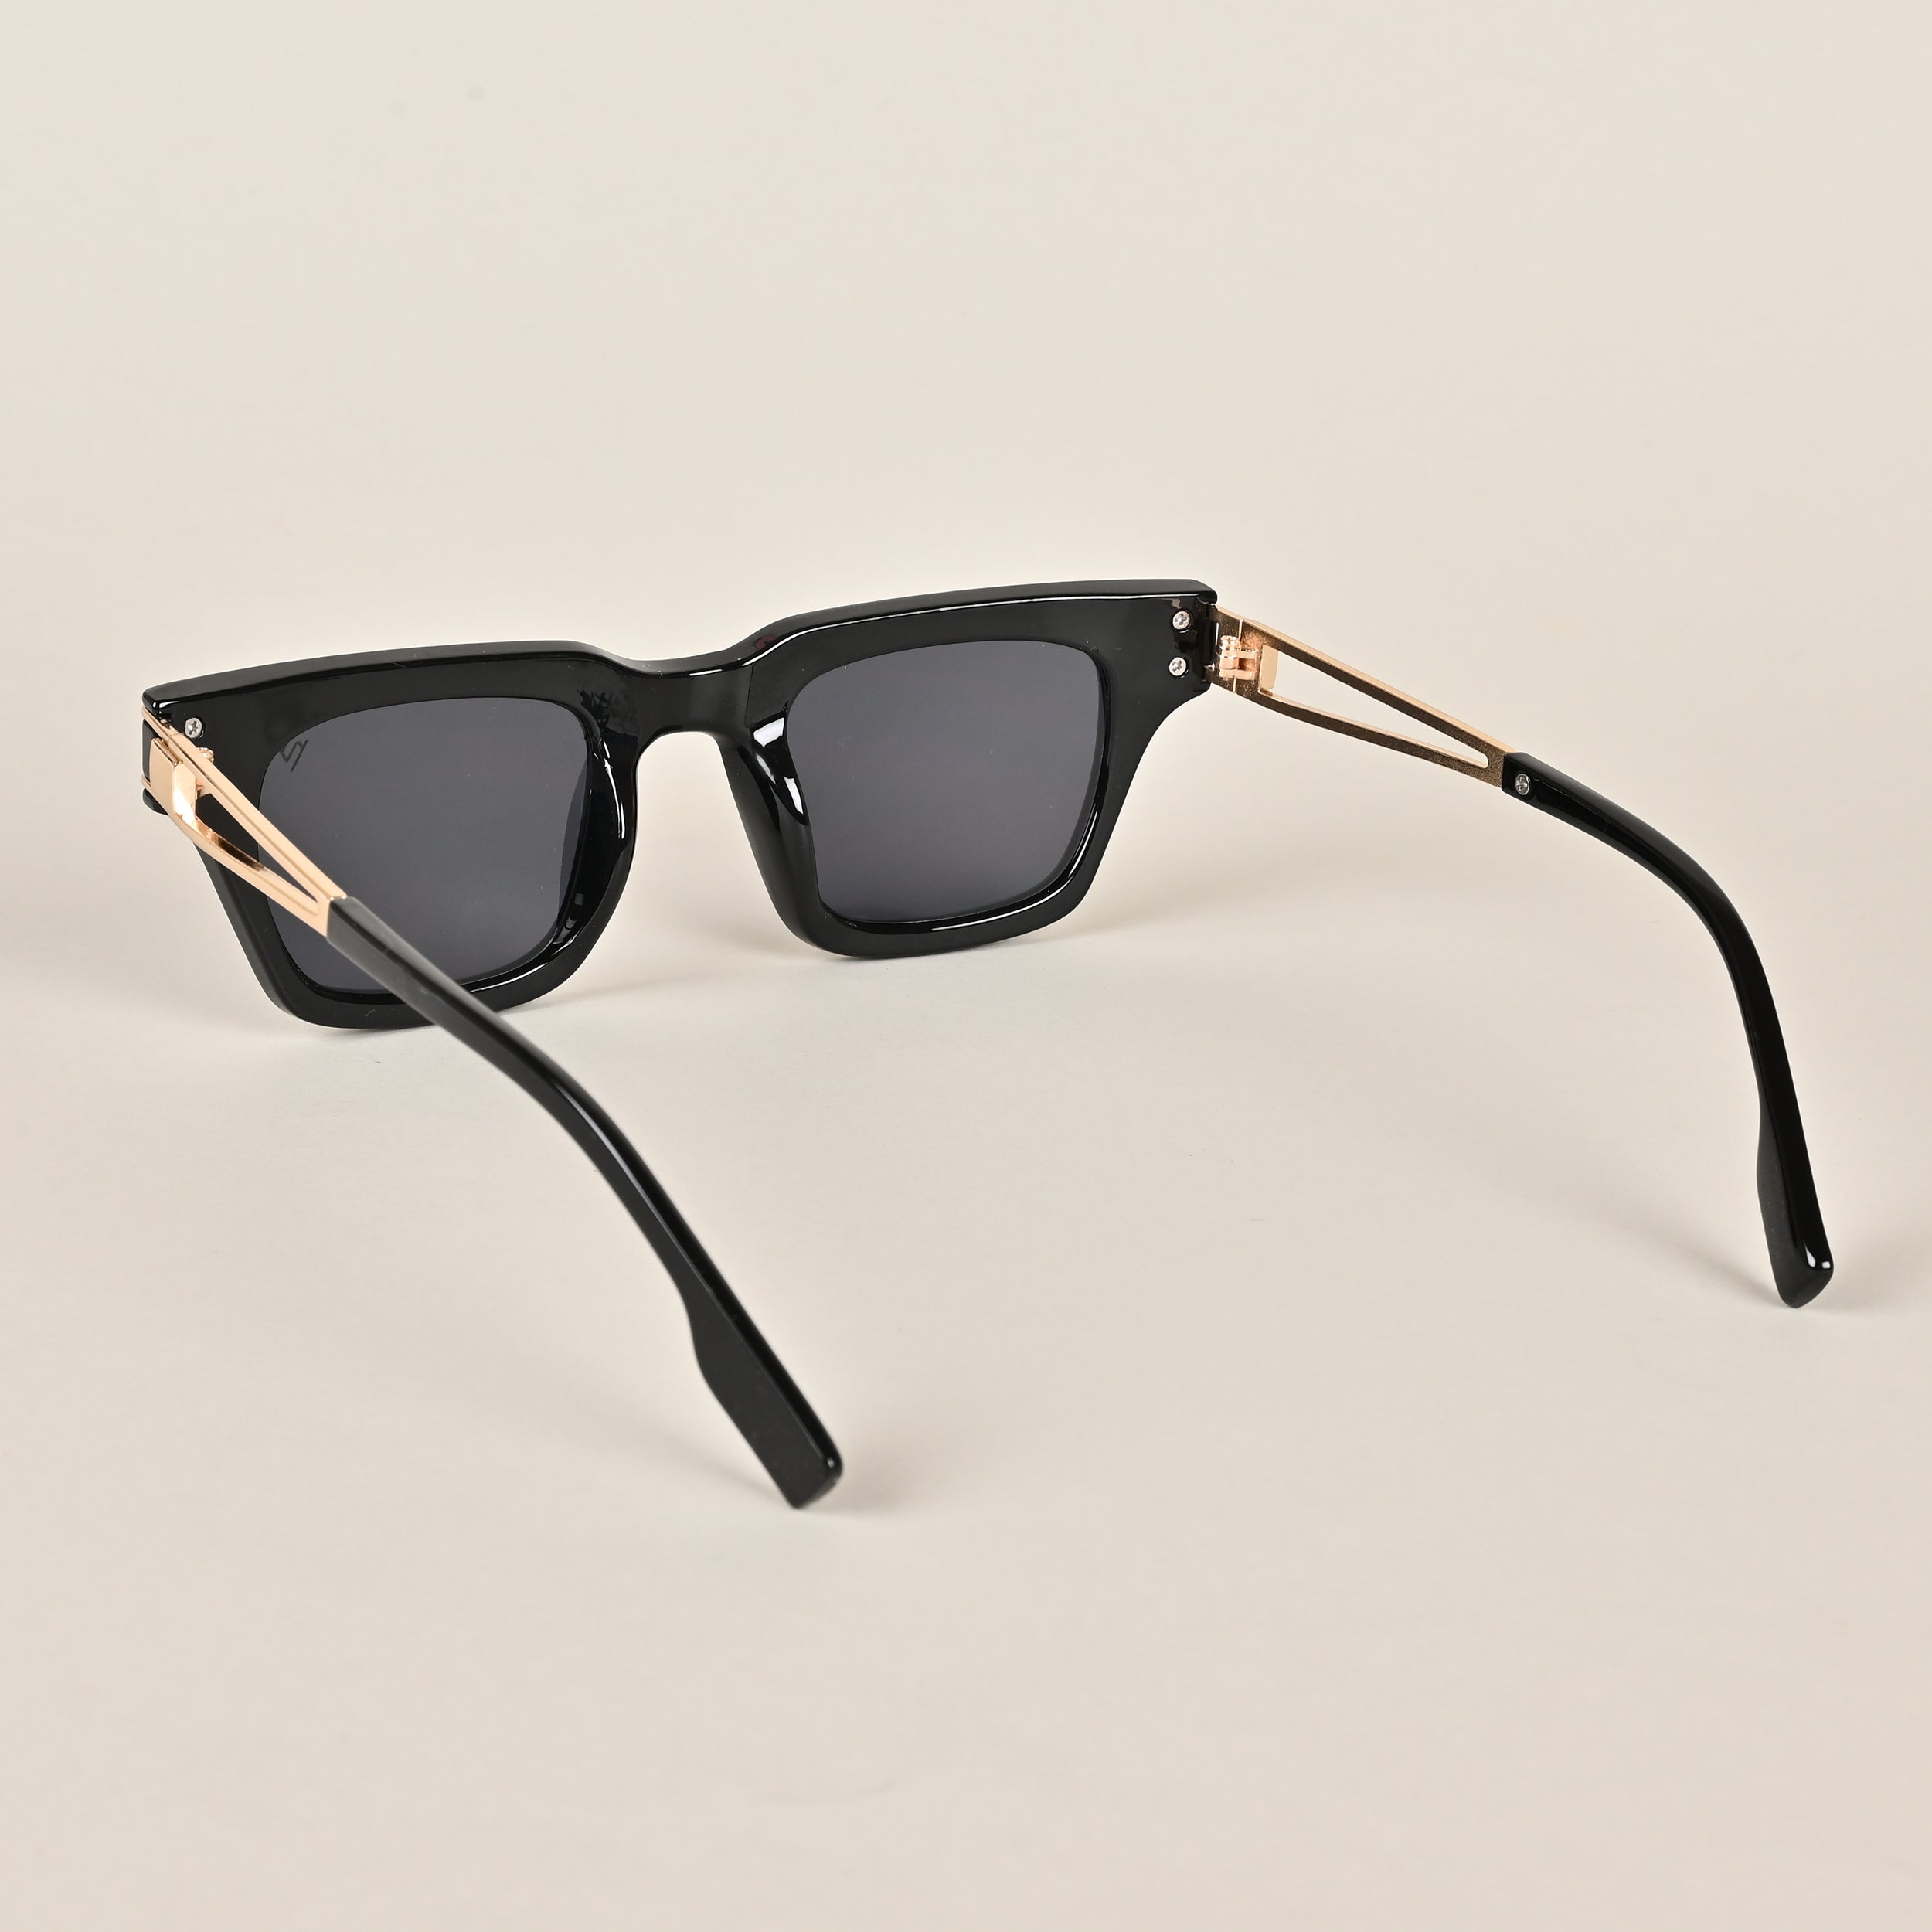 Voyage Black Wayfarer Sunglasses - MG3924